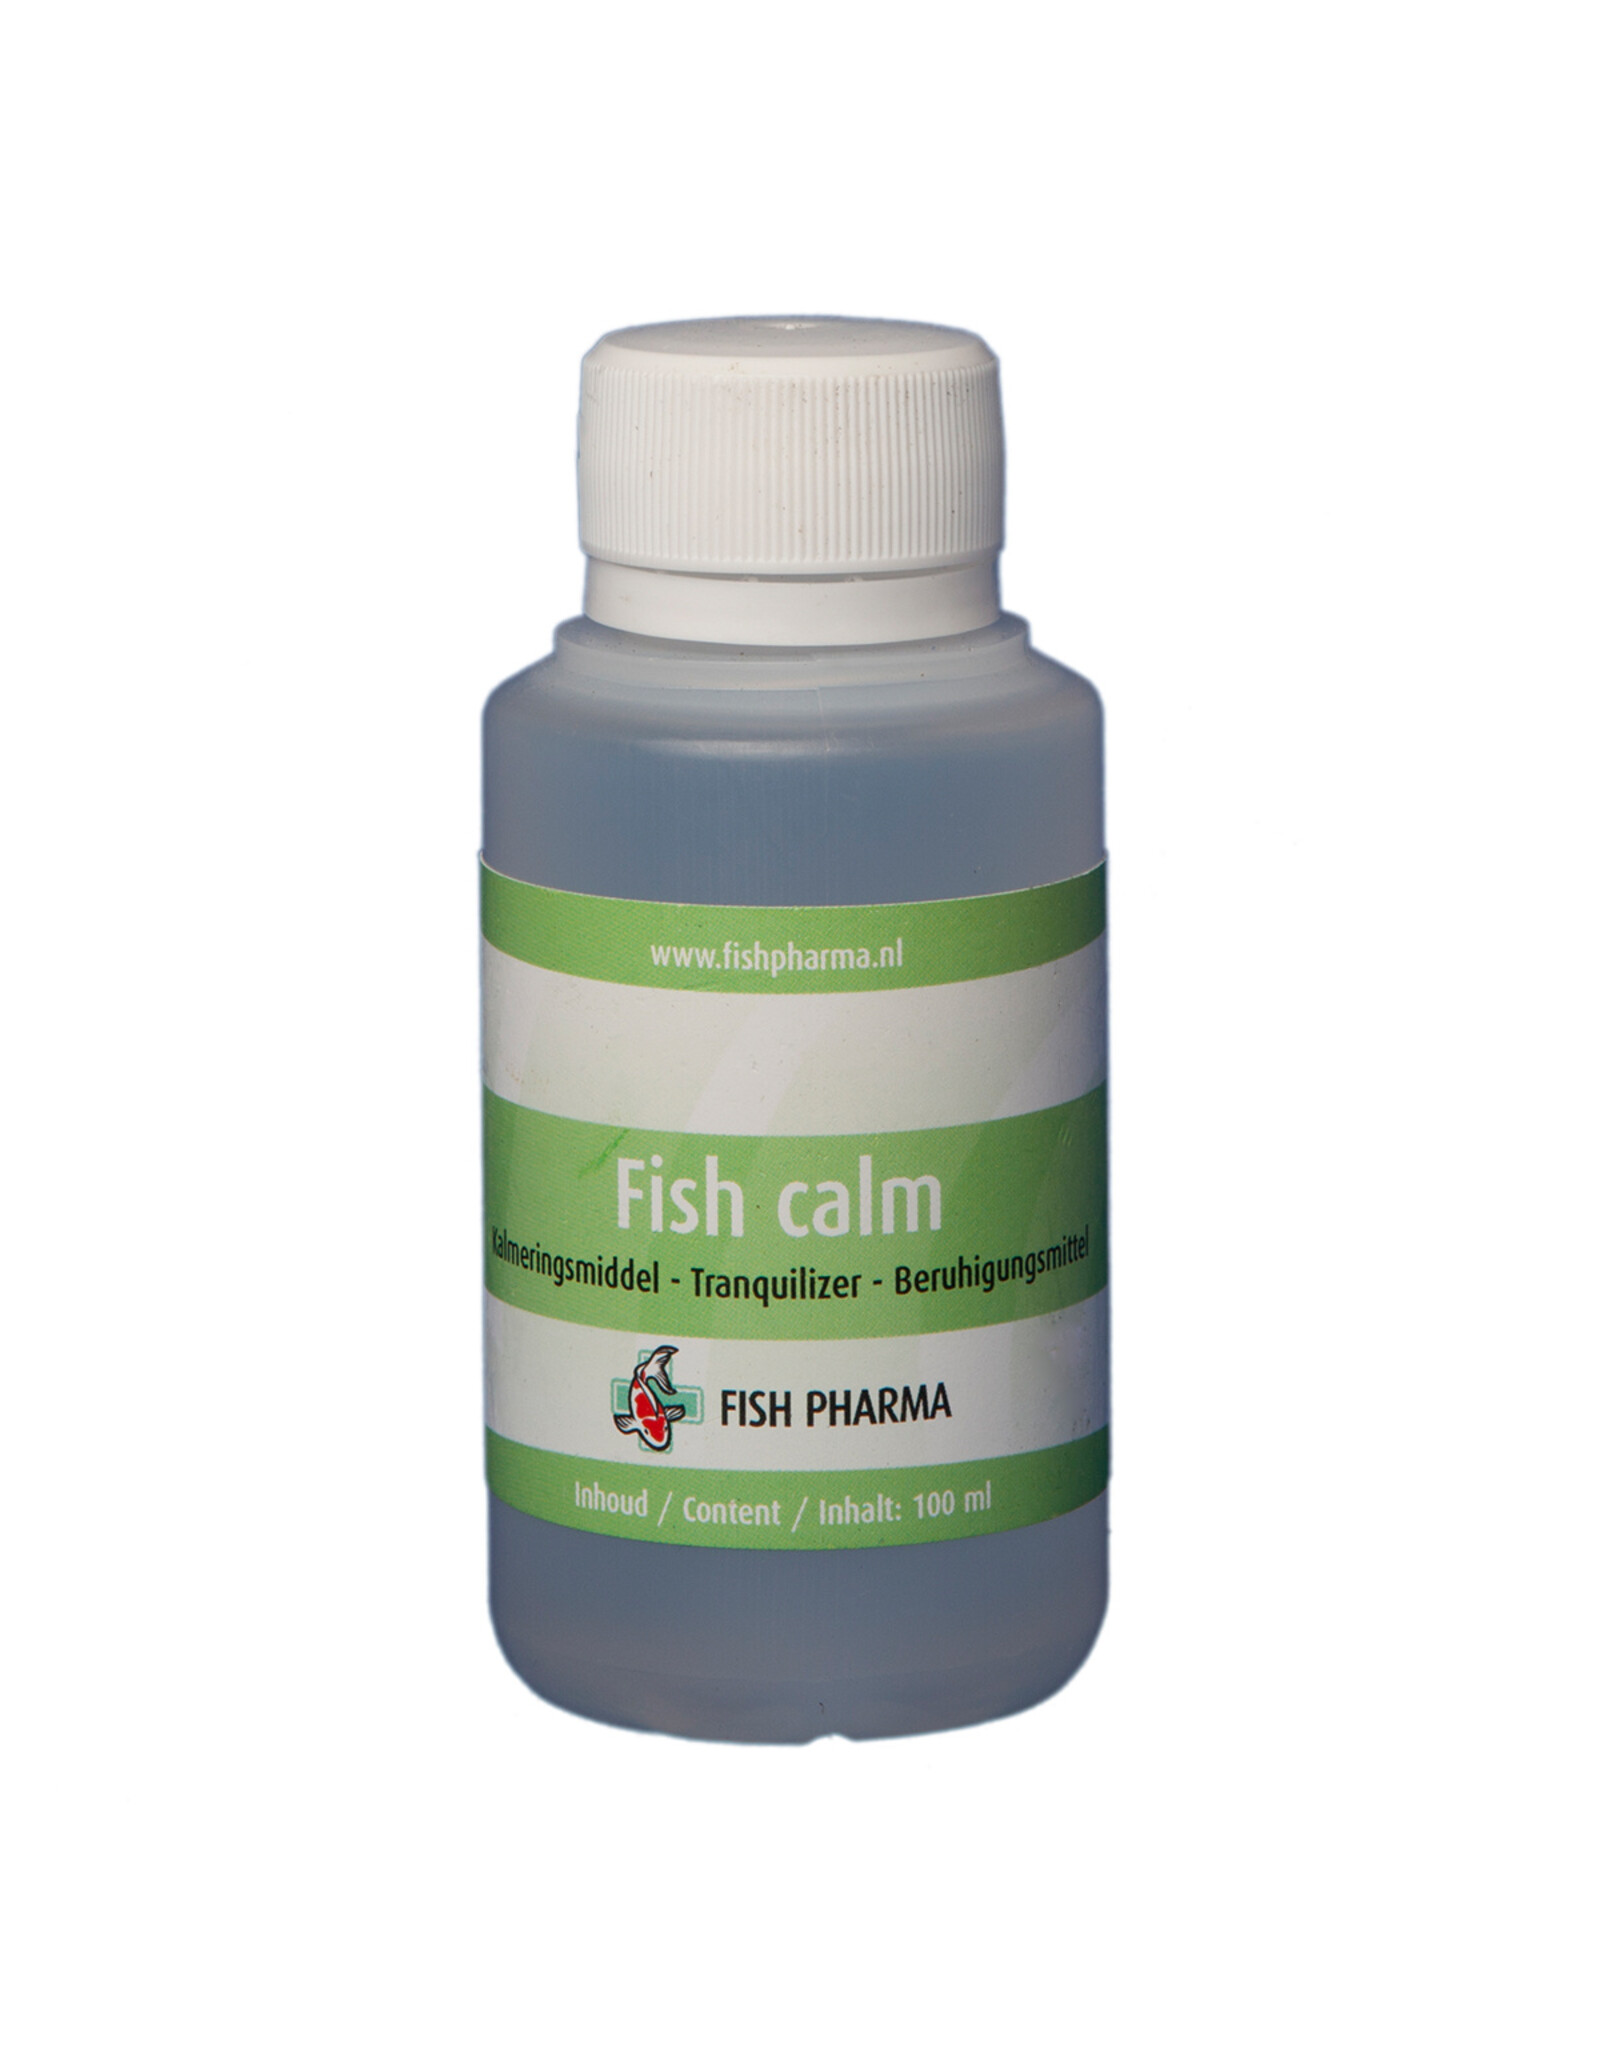 Fish Pharma Fish Calm anesthetic liquid for fish.